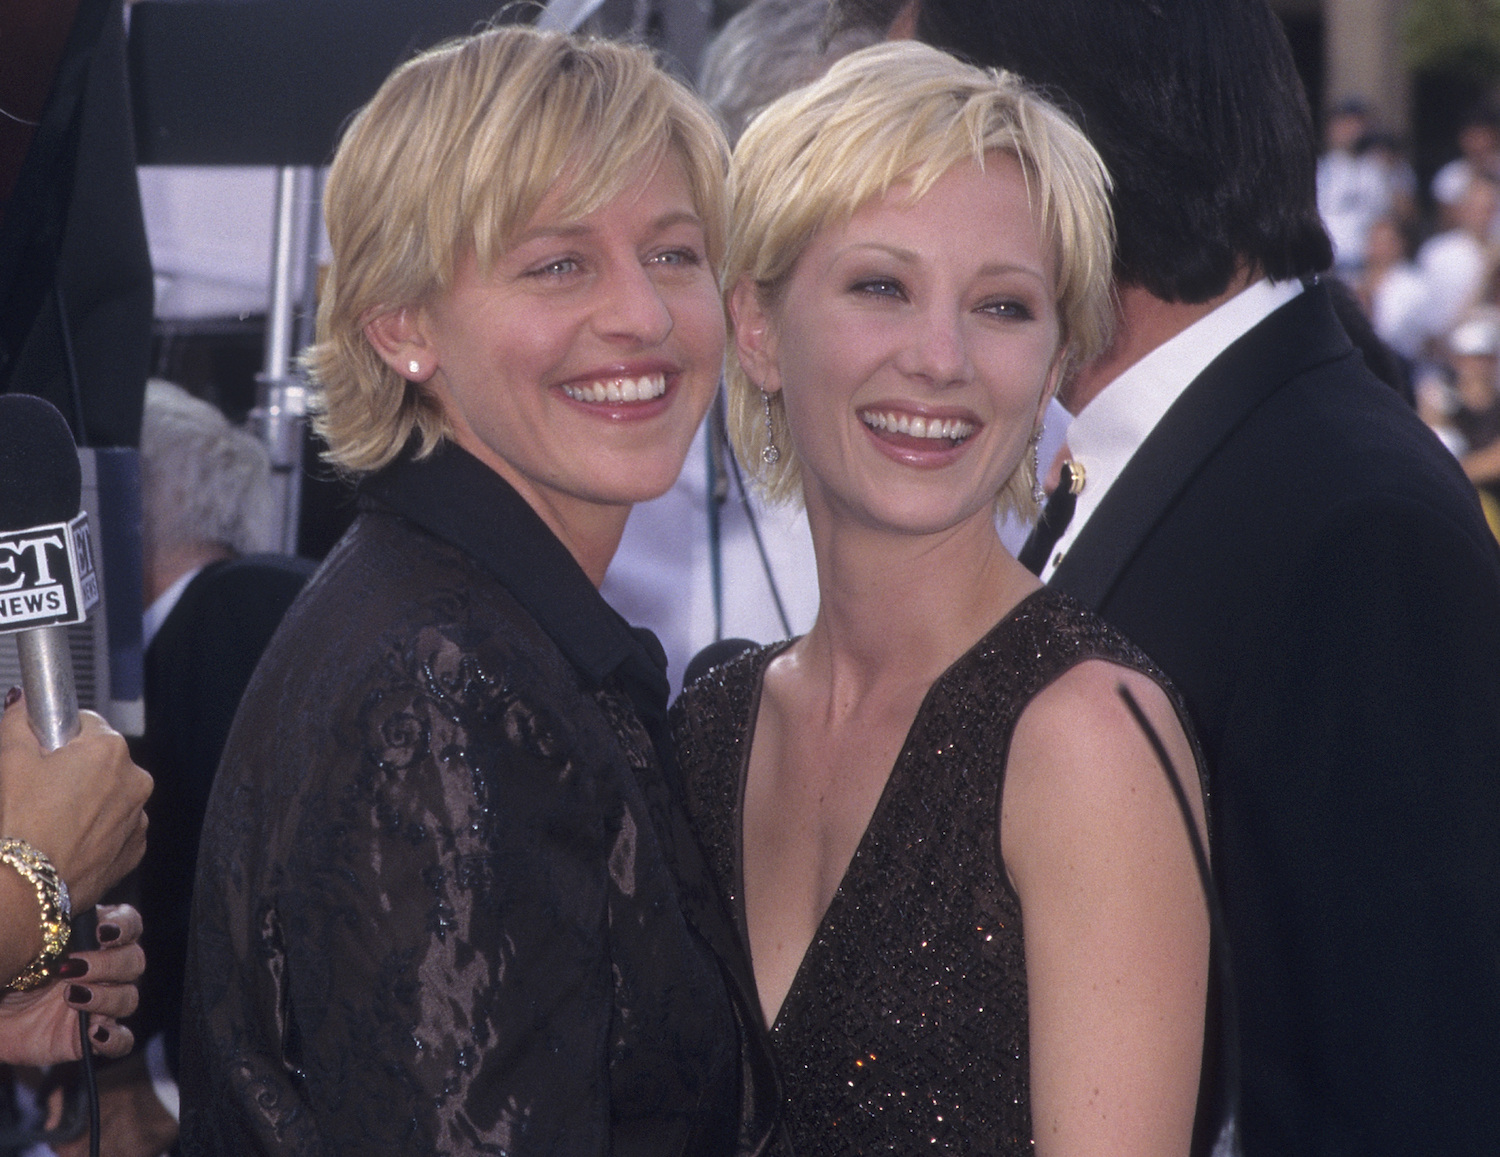 Ellen DeGeneres and Anne Heche attend the 49th Annual Primetime Emmy Awards on September 14, 1997